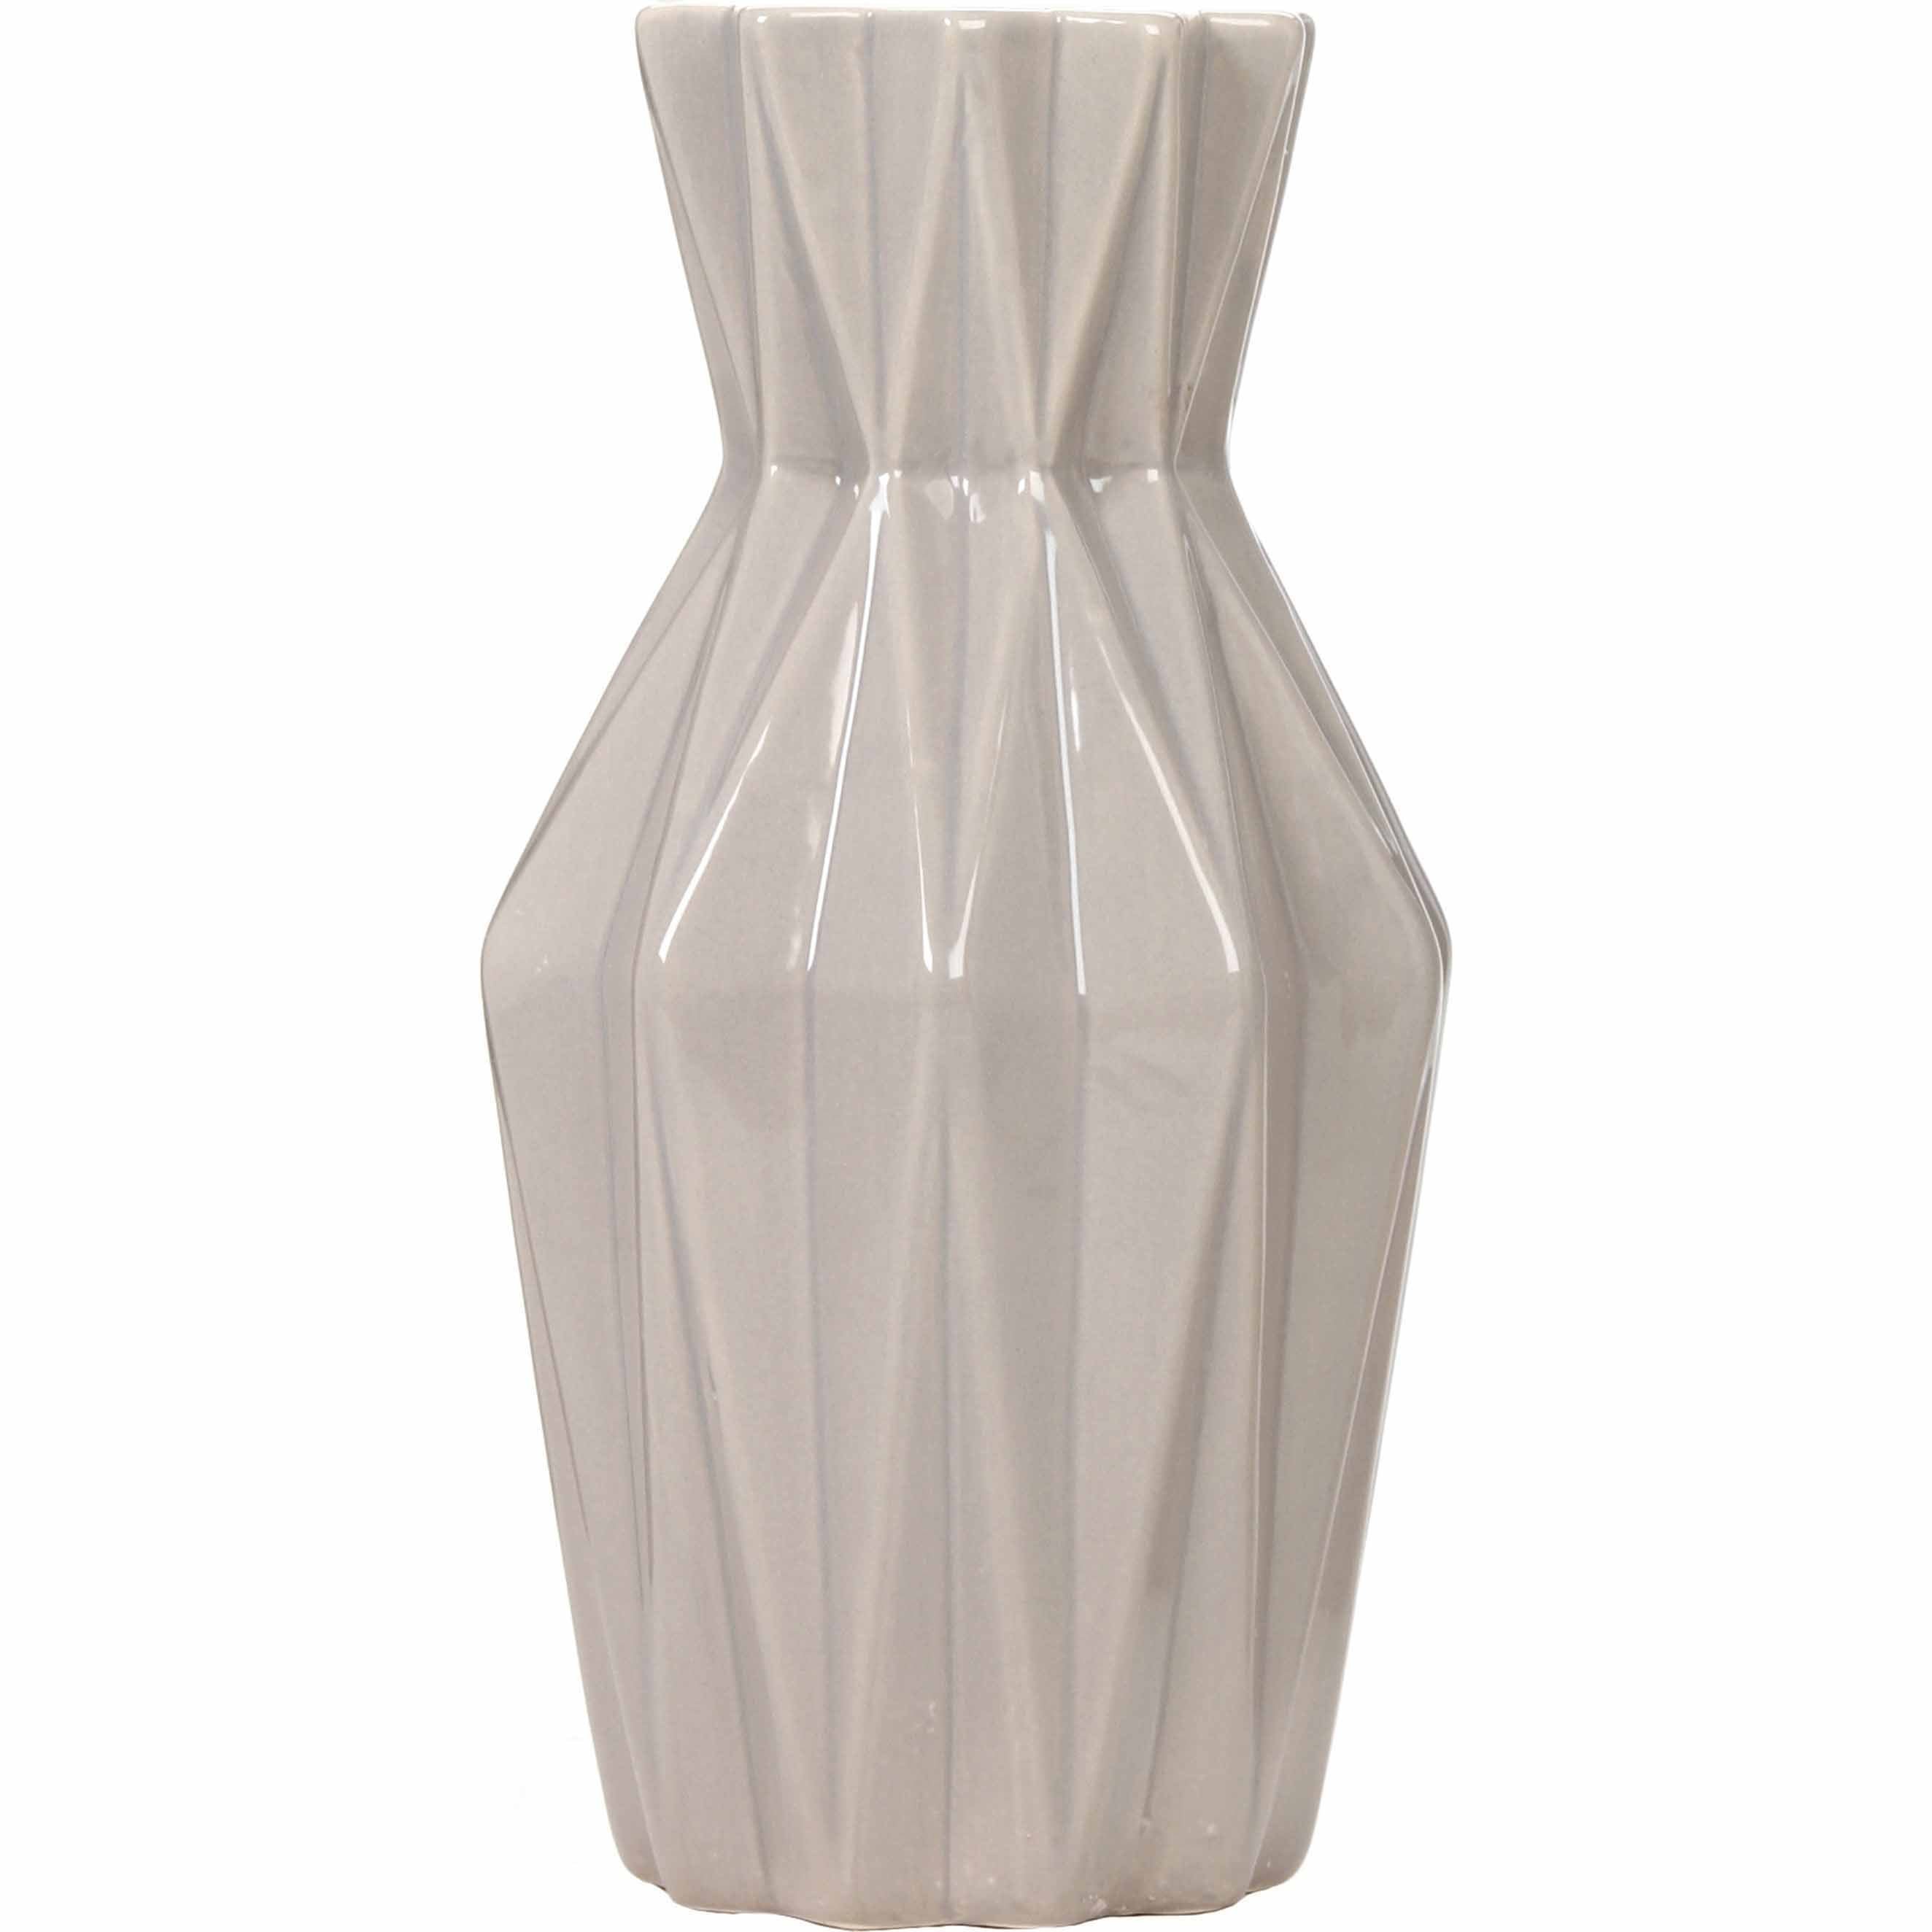 Mainstays Geometric Ceramic Vase, Grey - Walmart.com